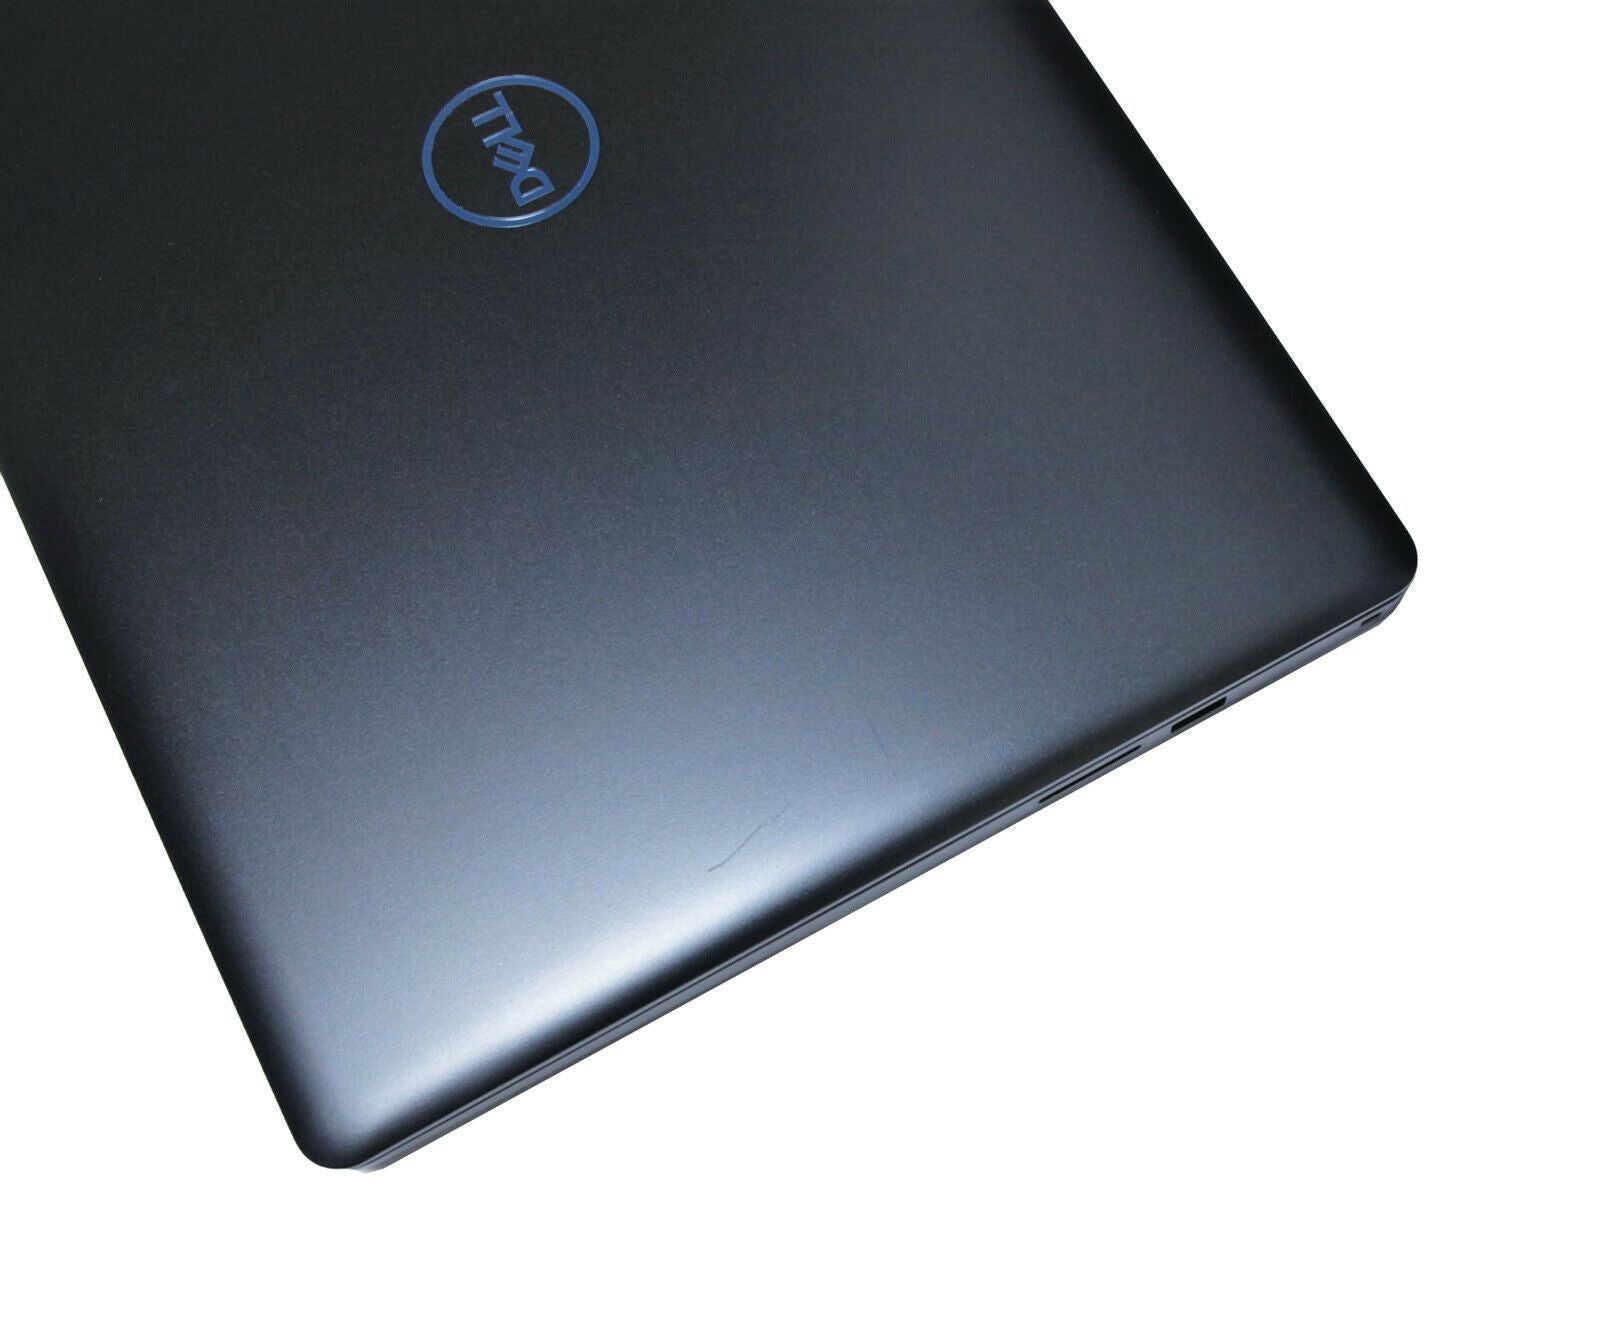 Dell G3 15 IPS Gaming Laptop: Core i7-8750H, GTX 1060 Max-Q, 128GB+1TB, 8GB RAM - CruiseTech